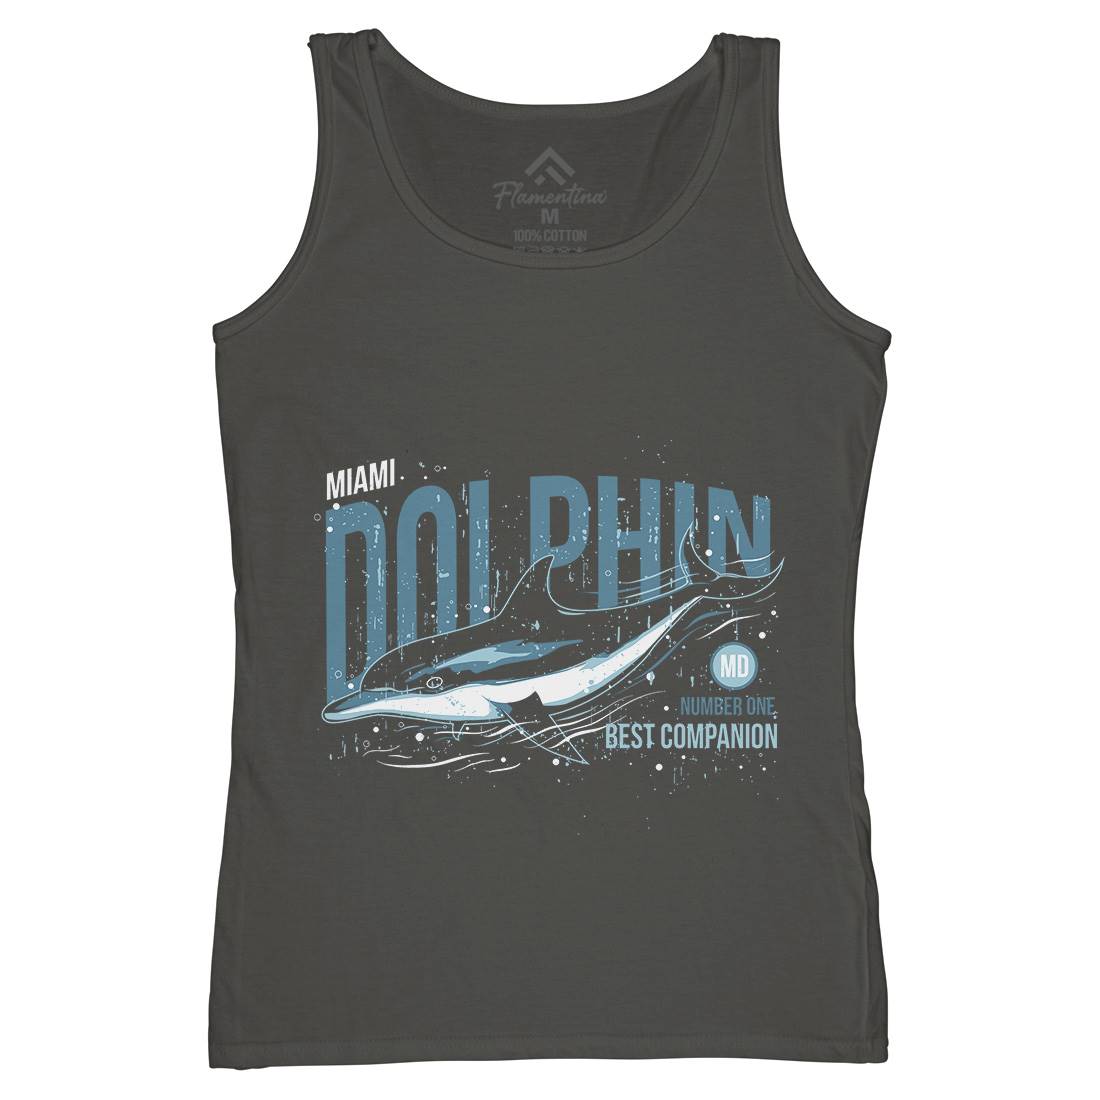 Dolphin Miami Womens Organic Tank Top Vest Animals B715